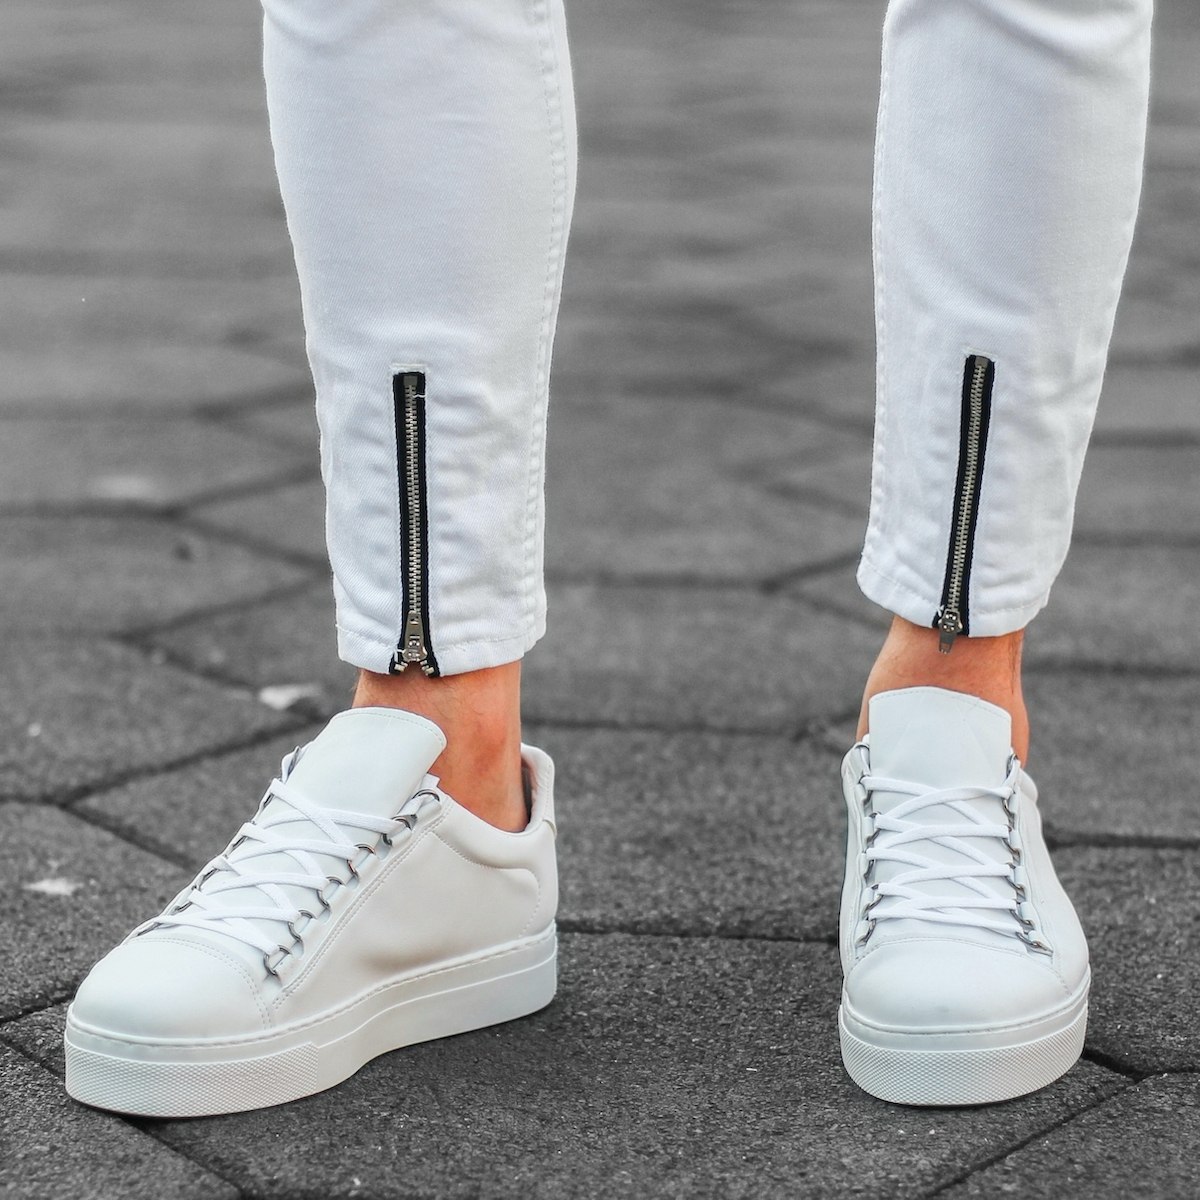 Men’s Low Top Outdoor Sneakers Shoes White | Martin Valen